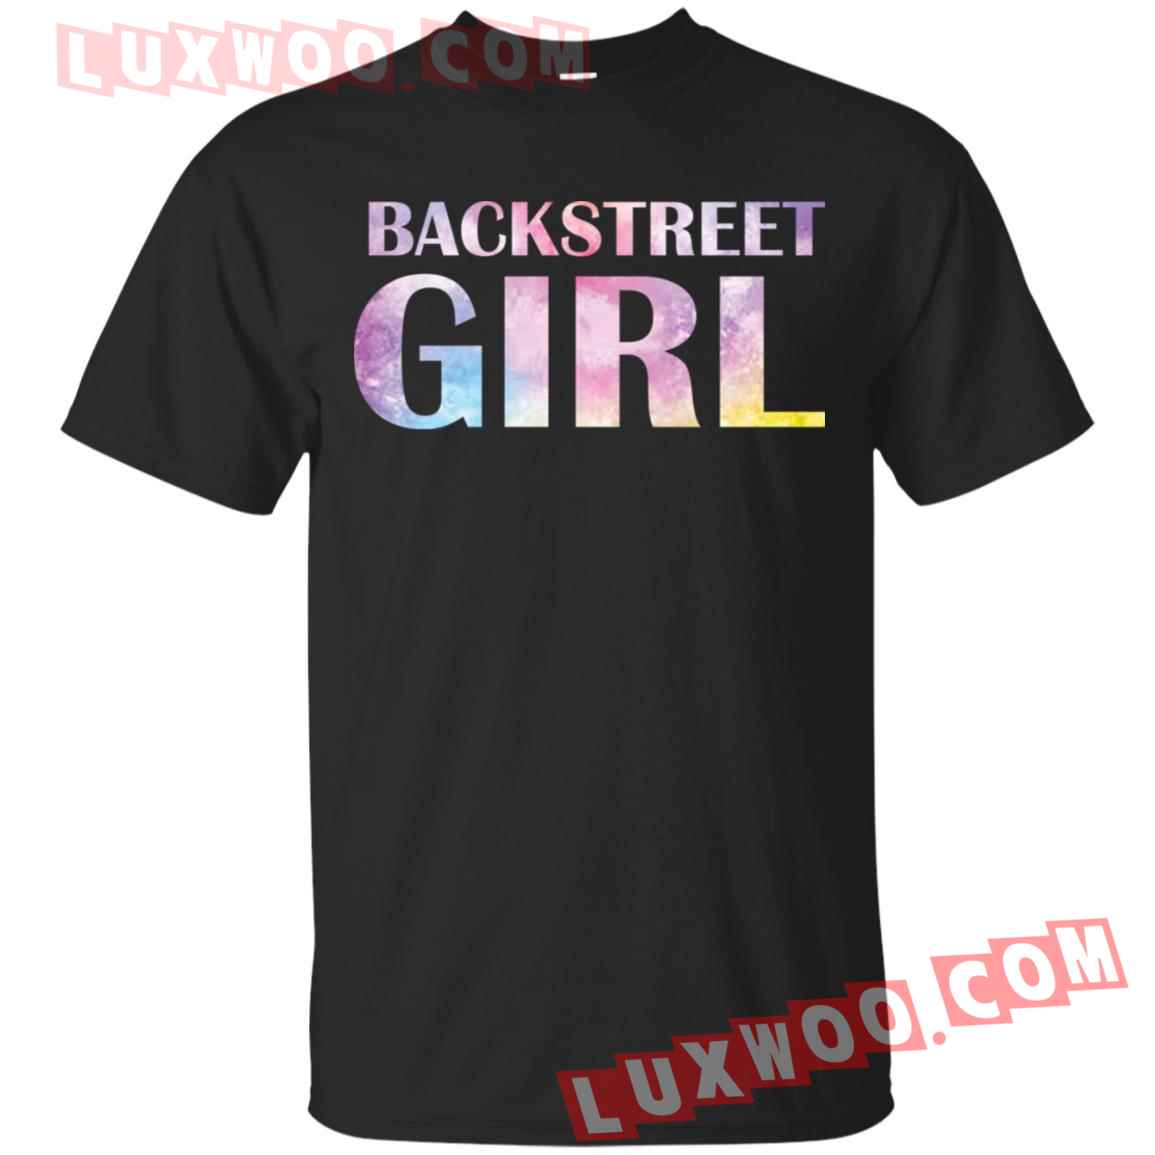 Backstreet Girl Shirt